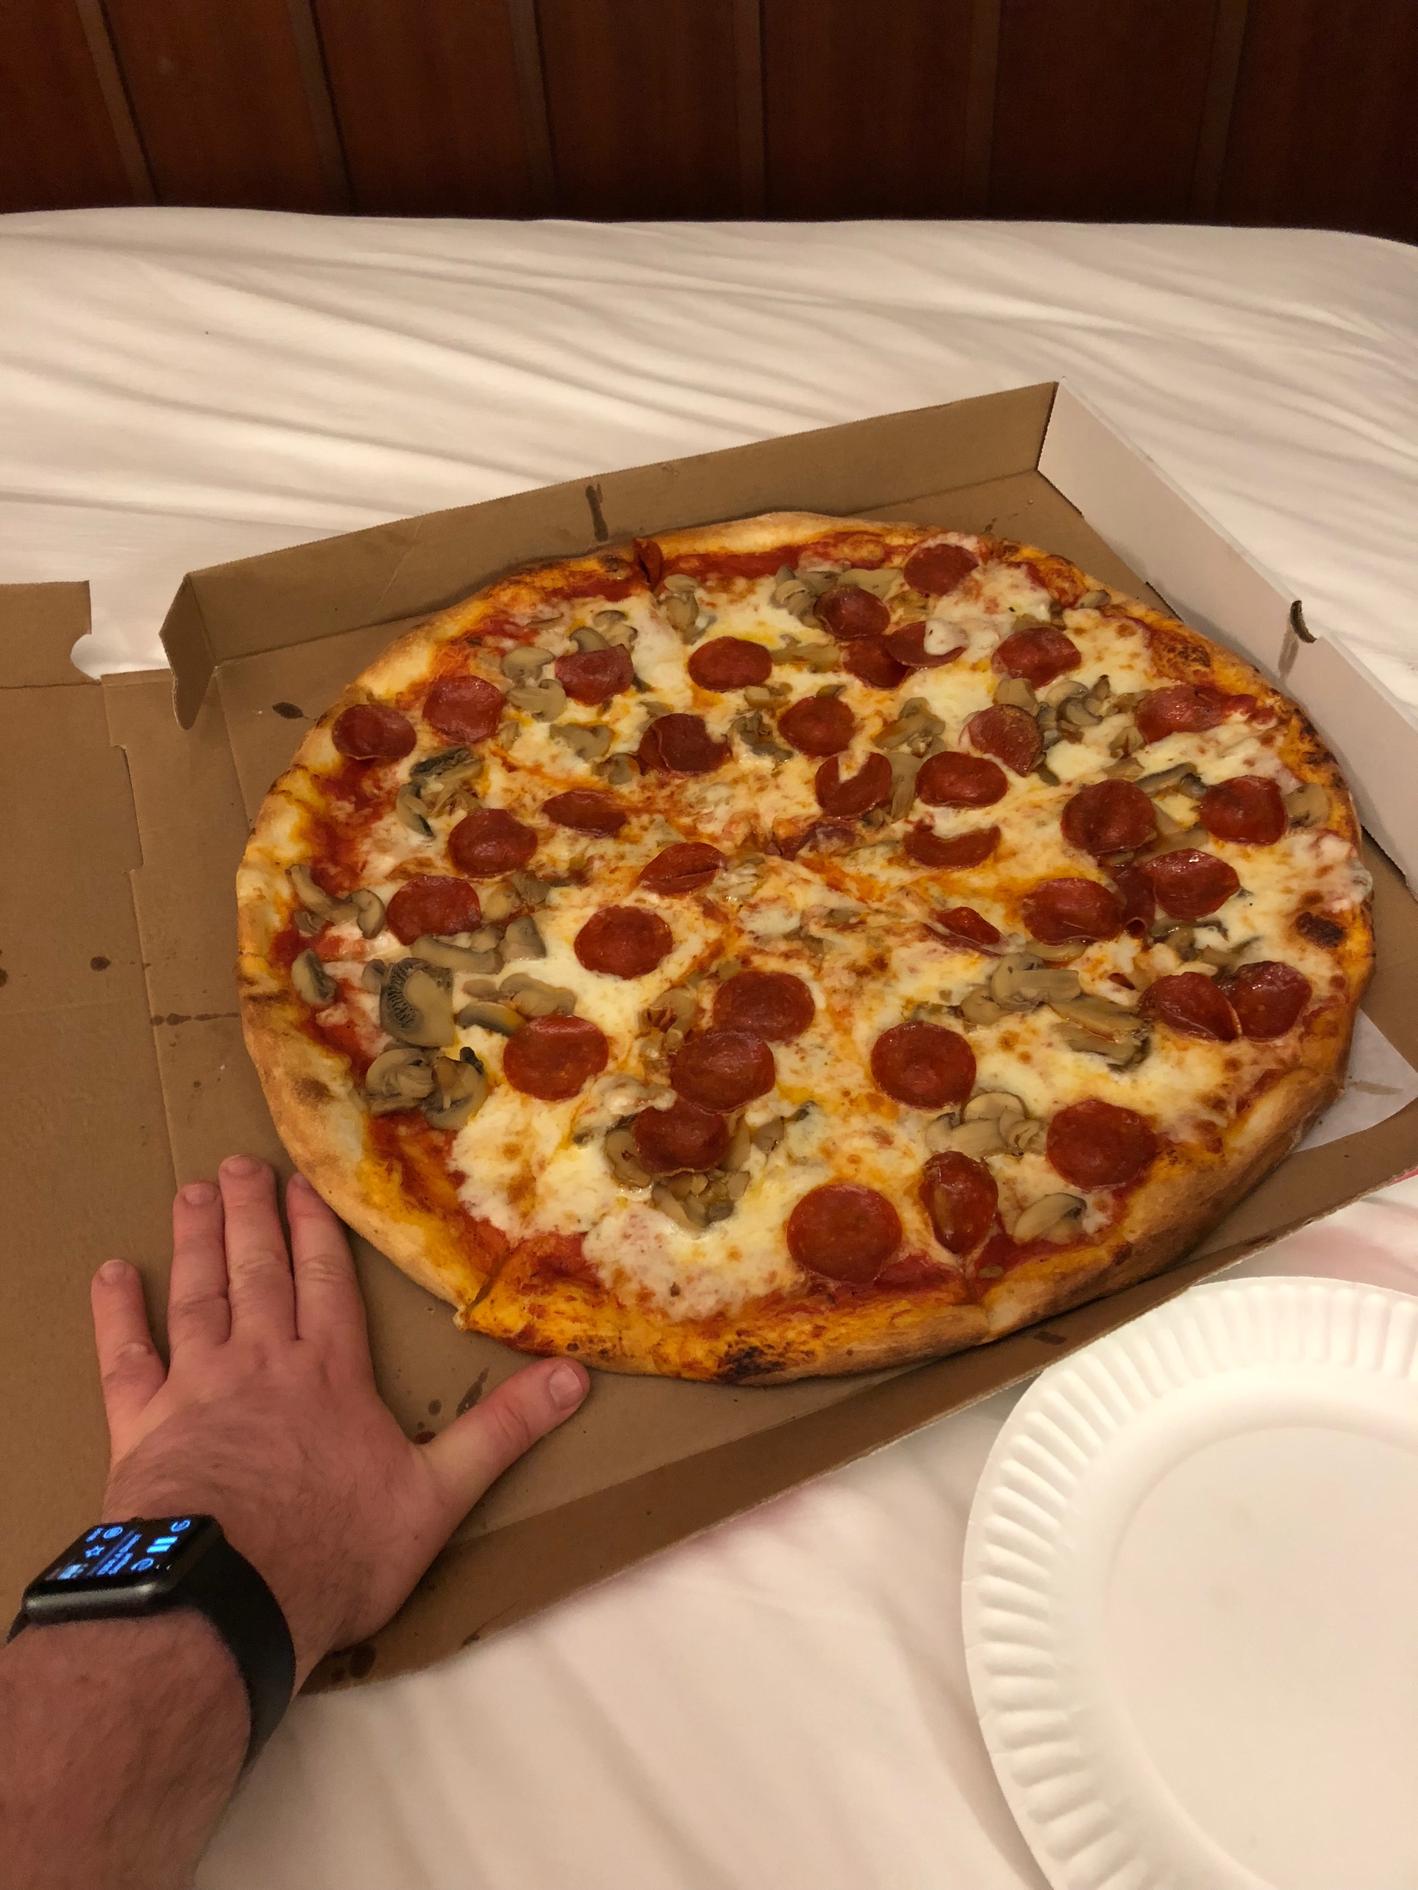 A huge pizza